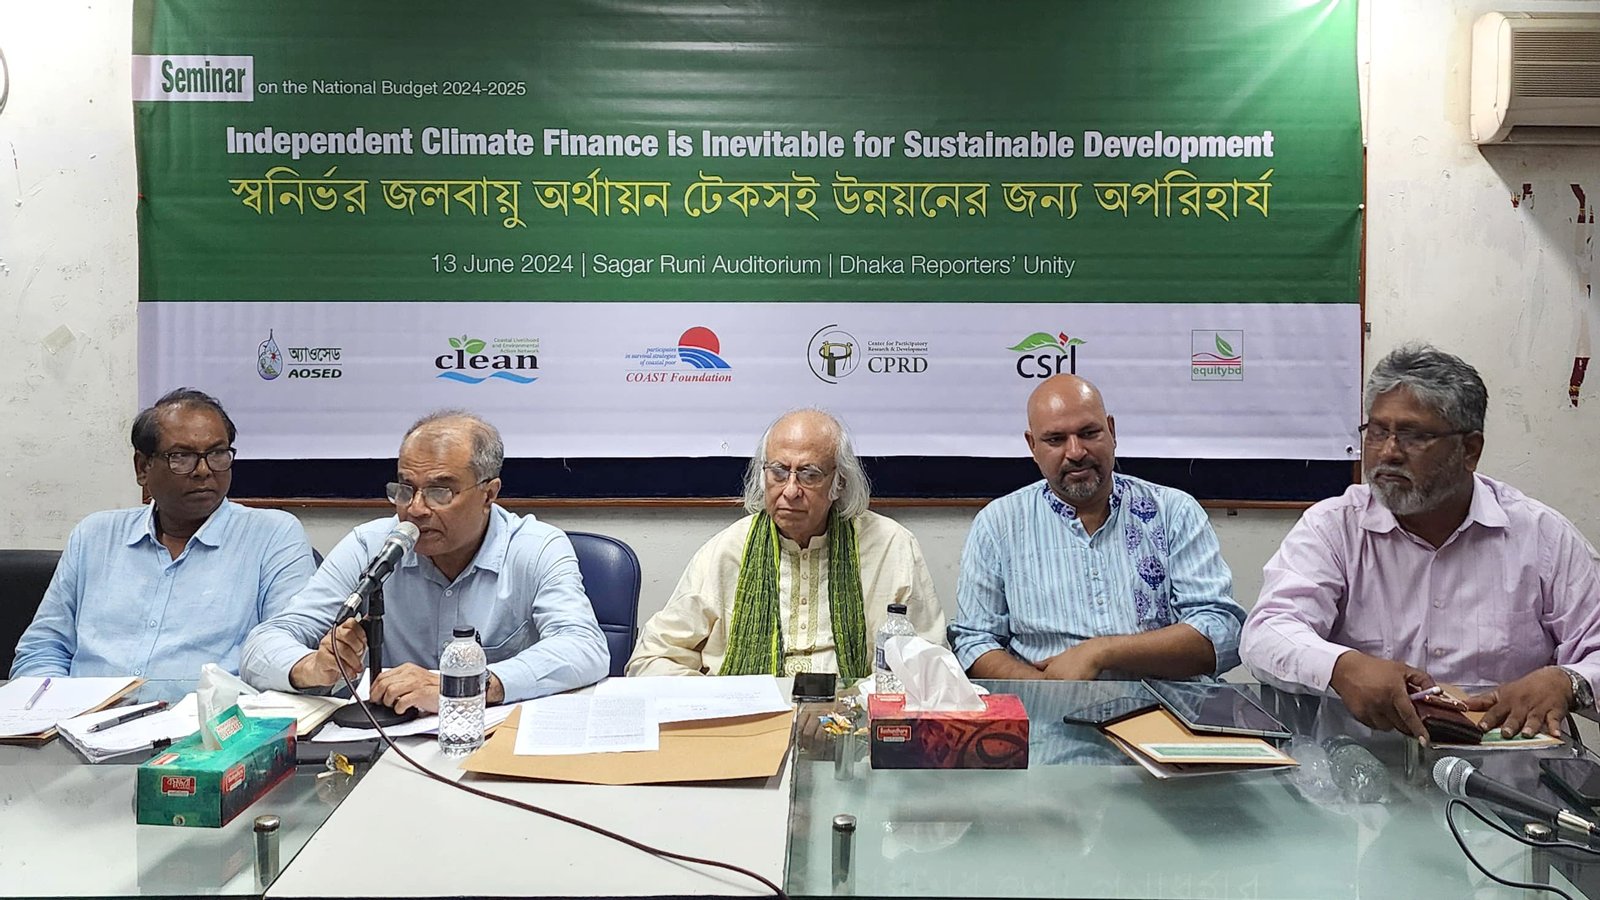 Budget shortfall hampers Bangladesh's climate change efforts